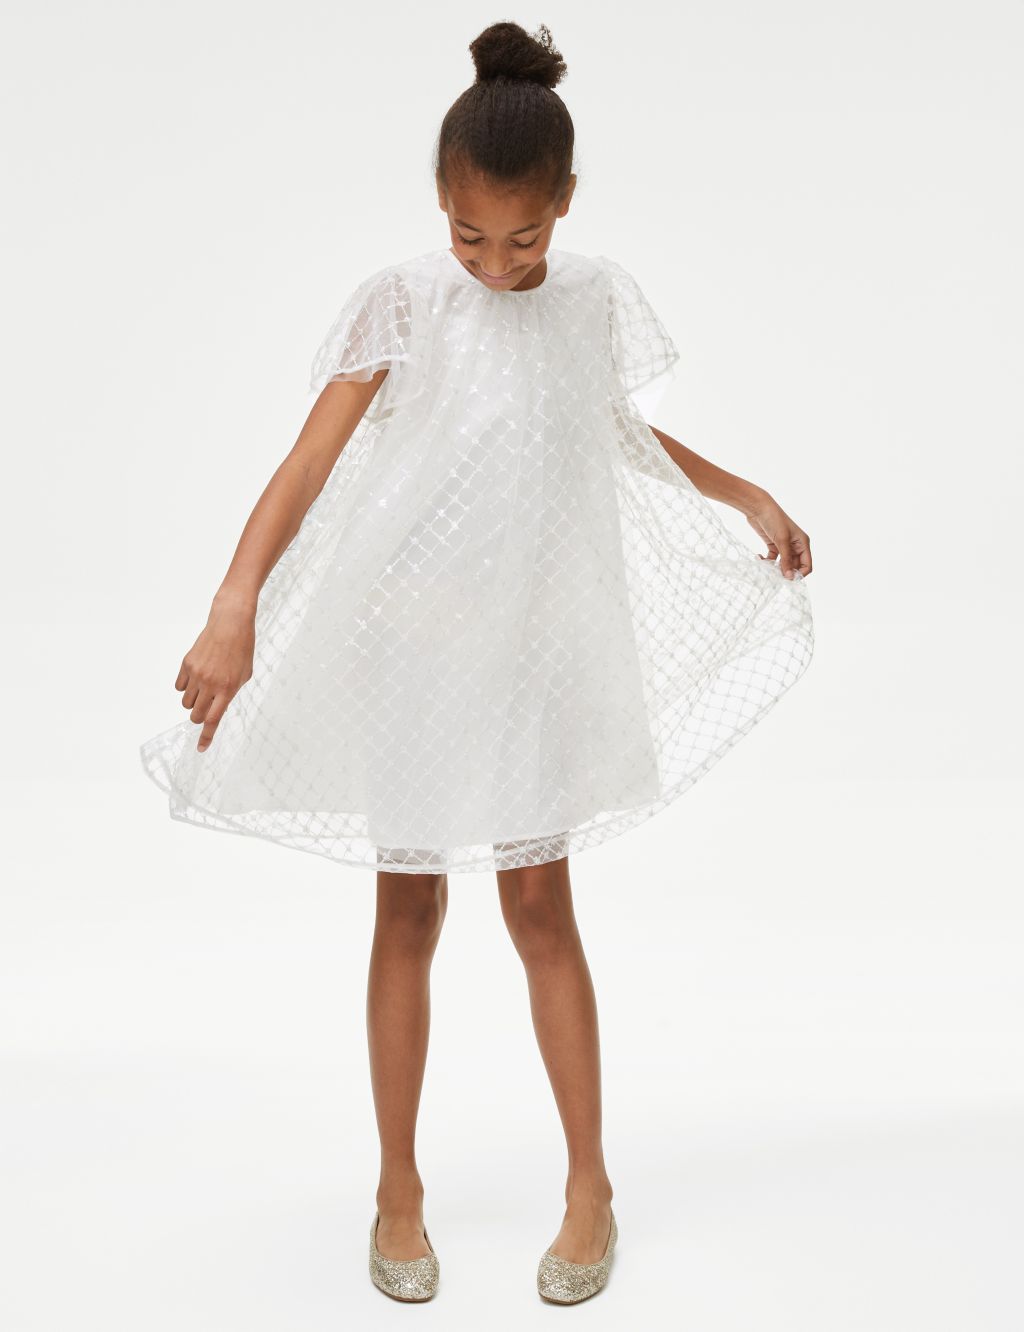 Patterned Sequin Dress (7-16 Yrs) image 3